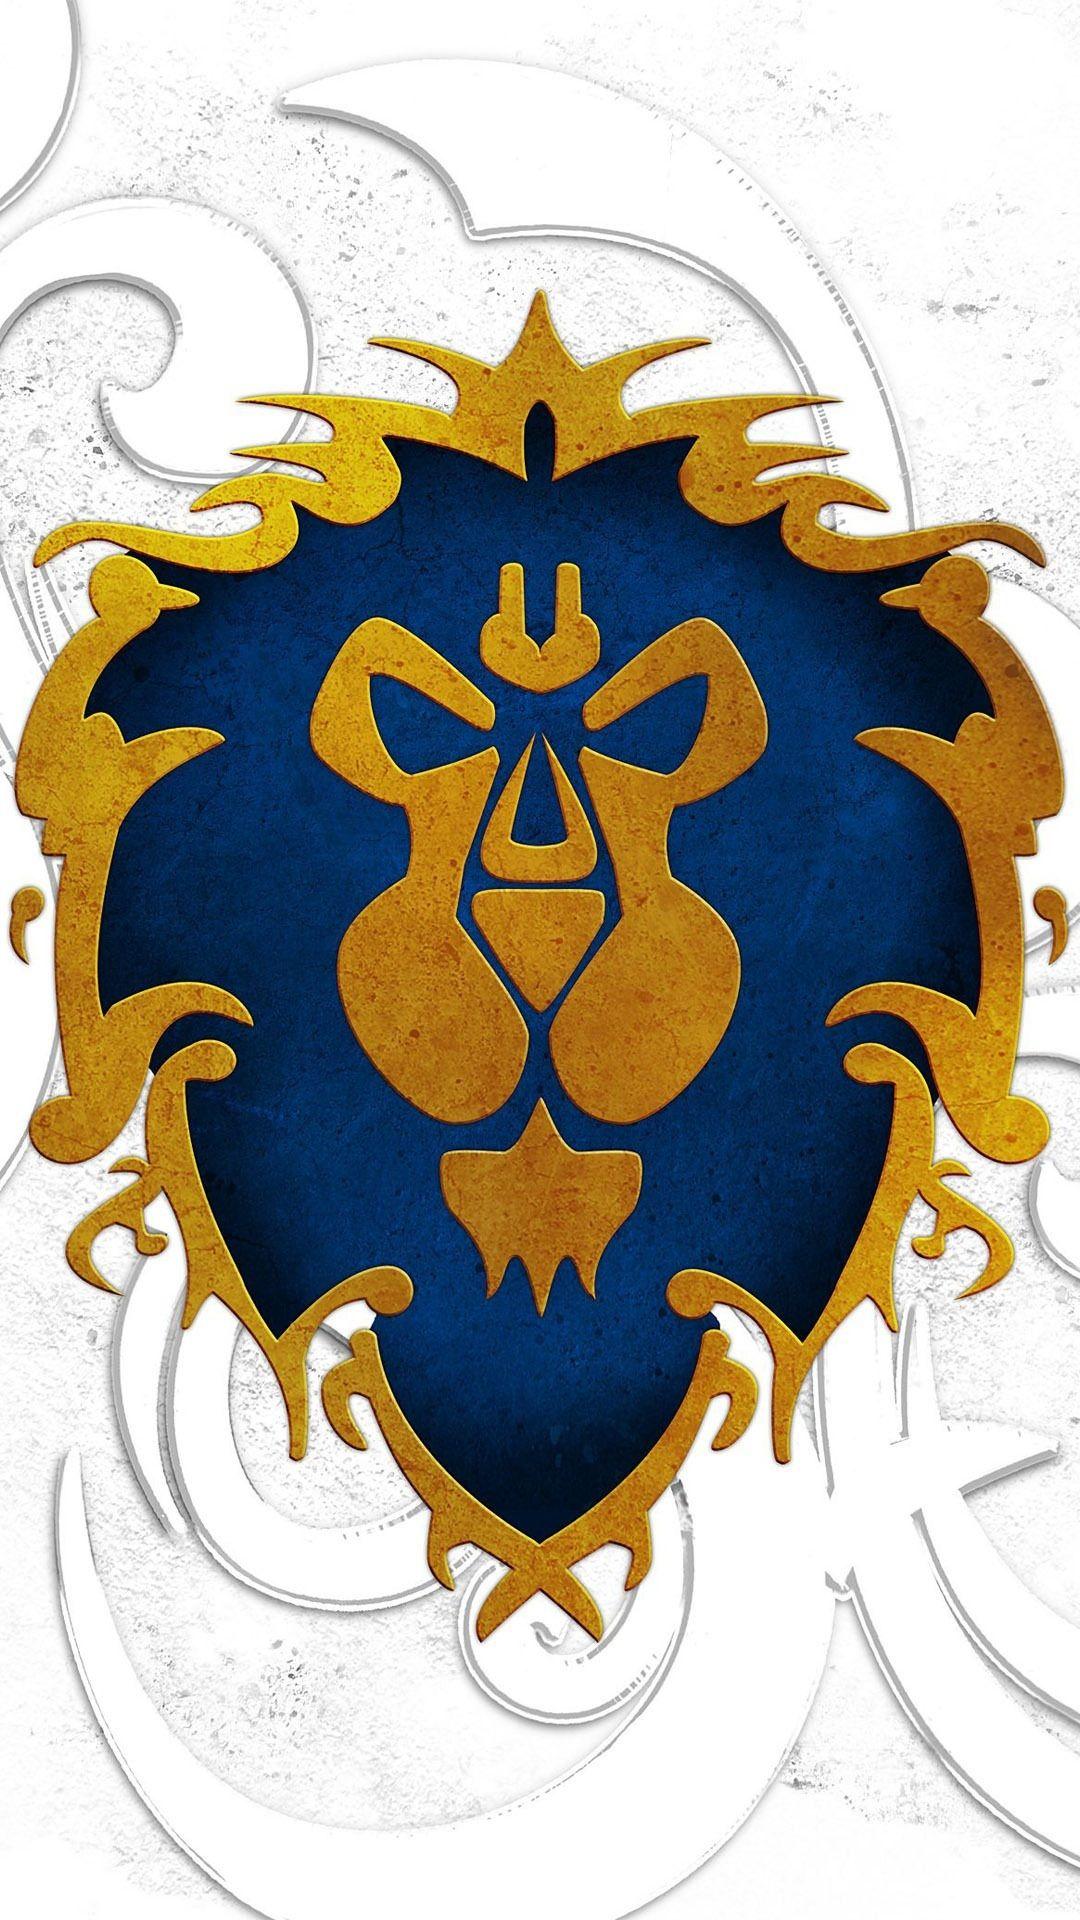 alliance crest wallpaper